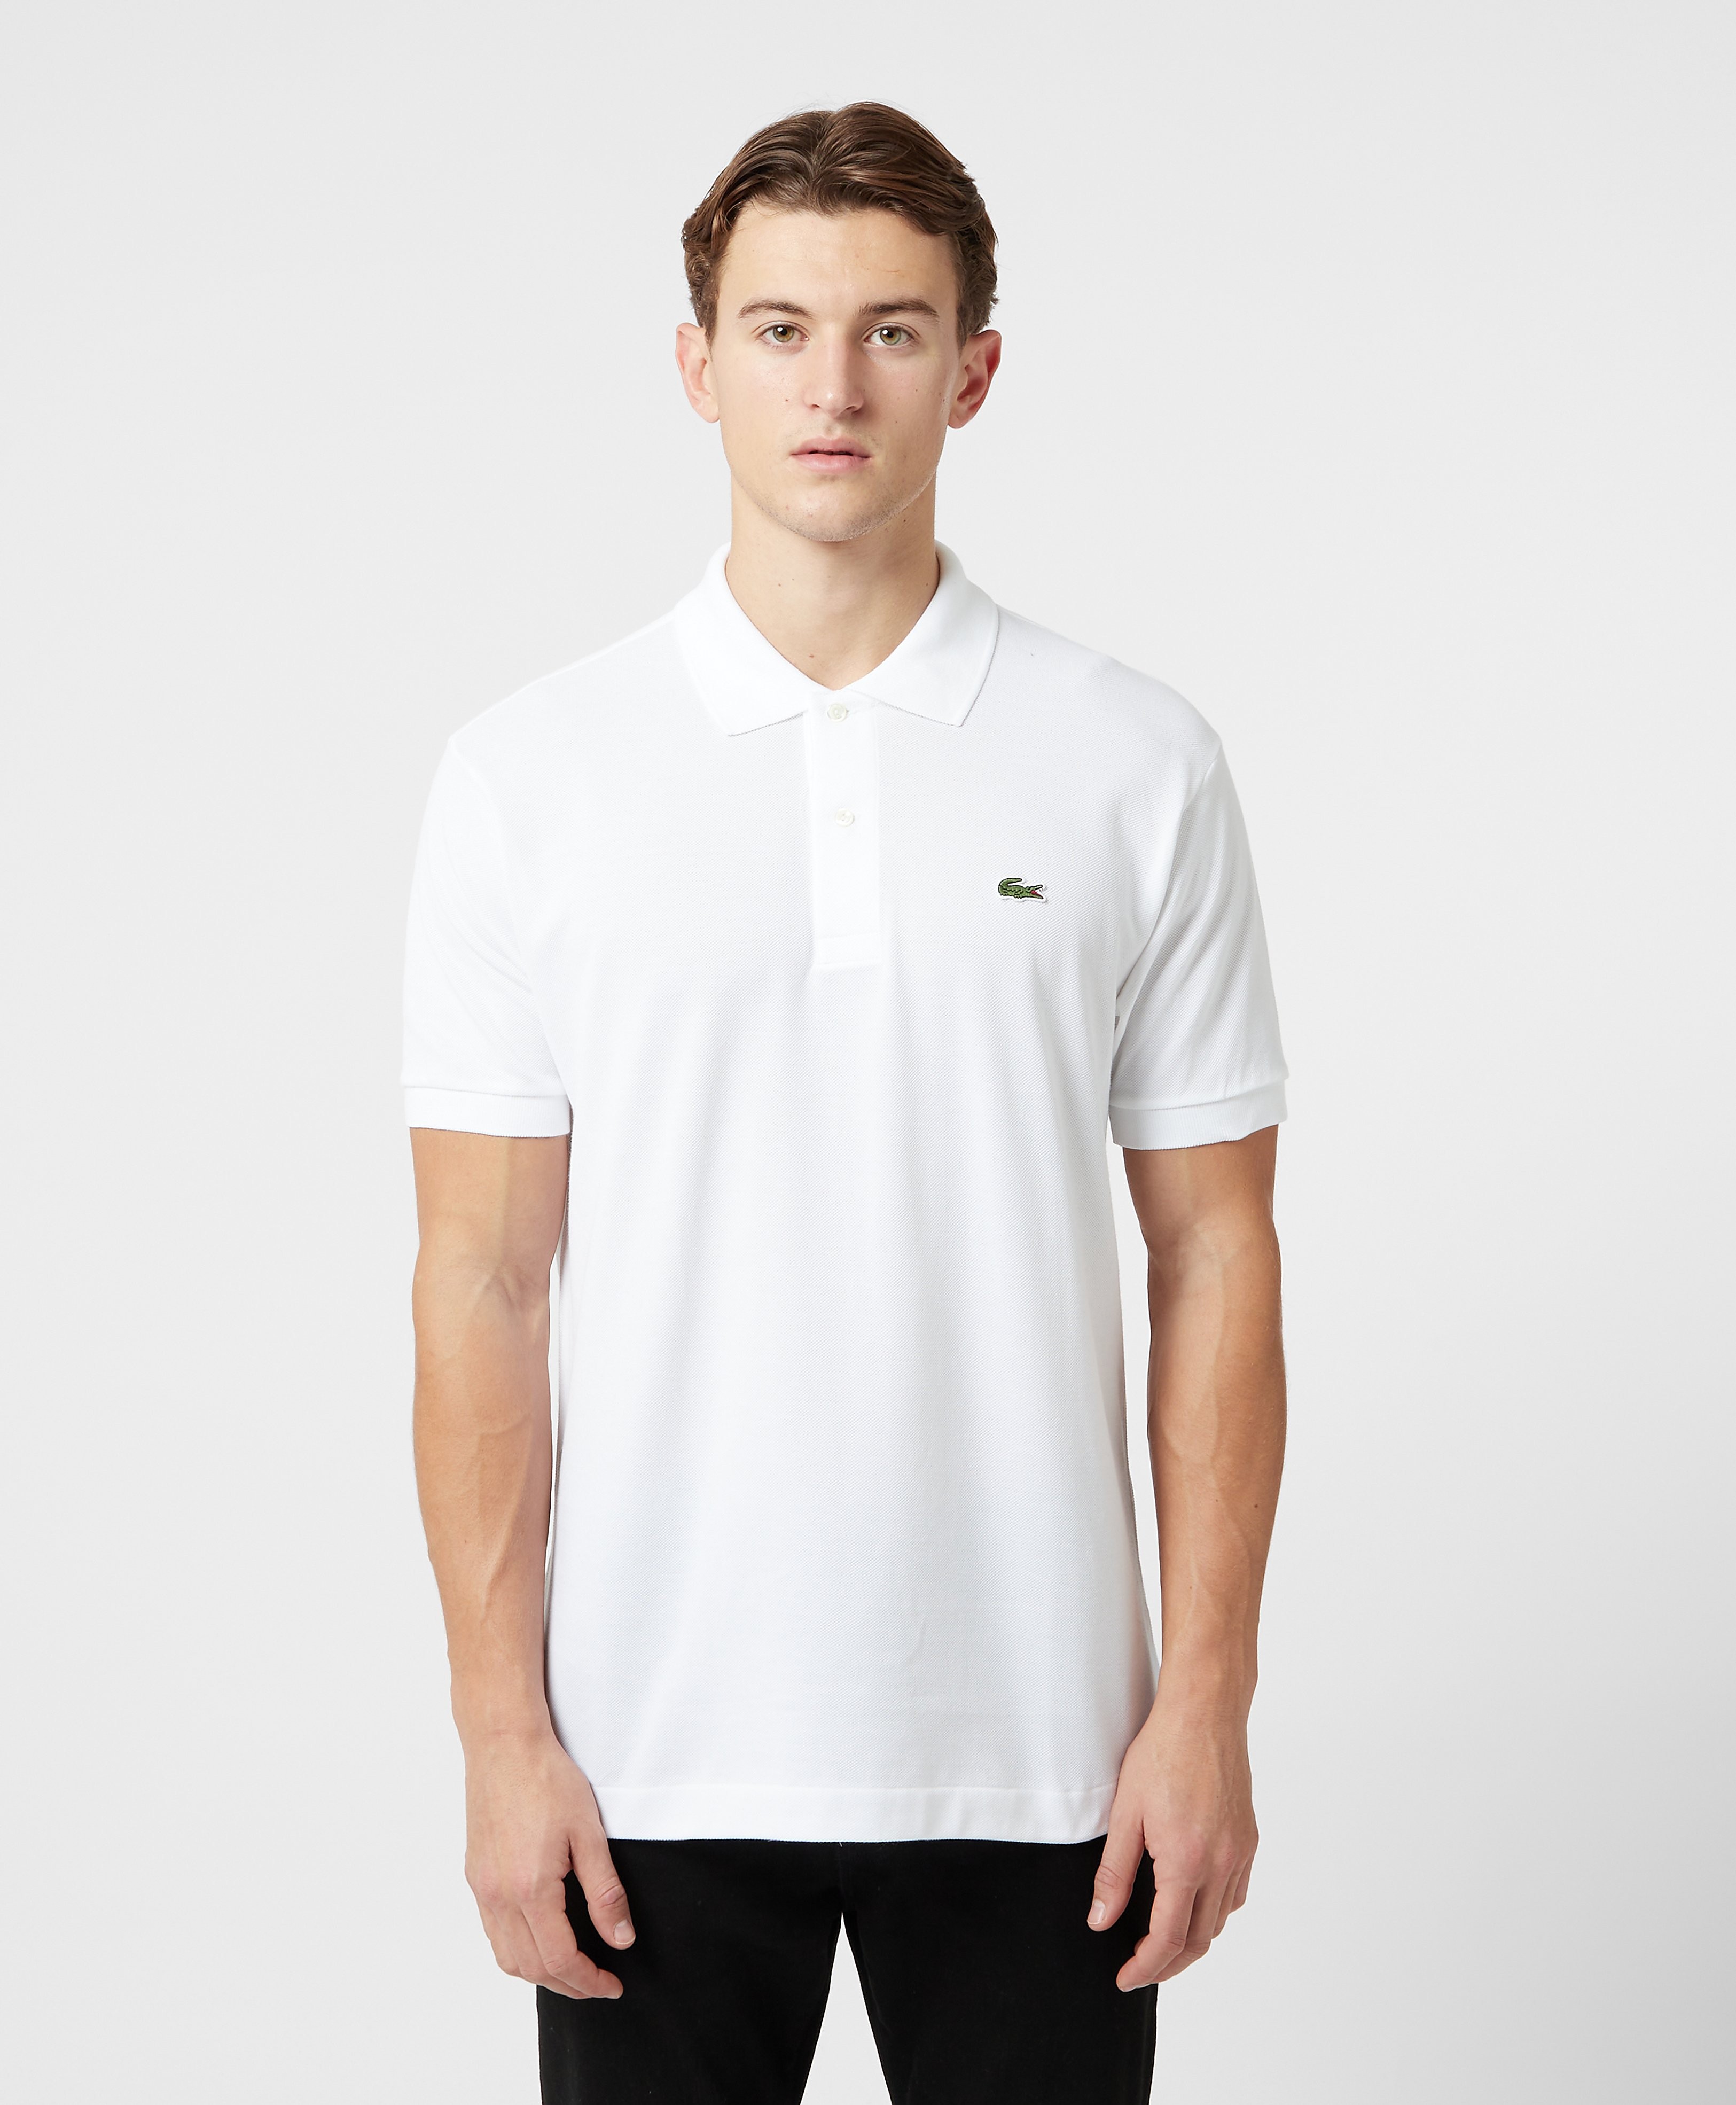 Lacoste Men's L1212 Polo Shirt - White/White, White/White